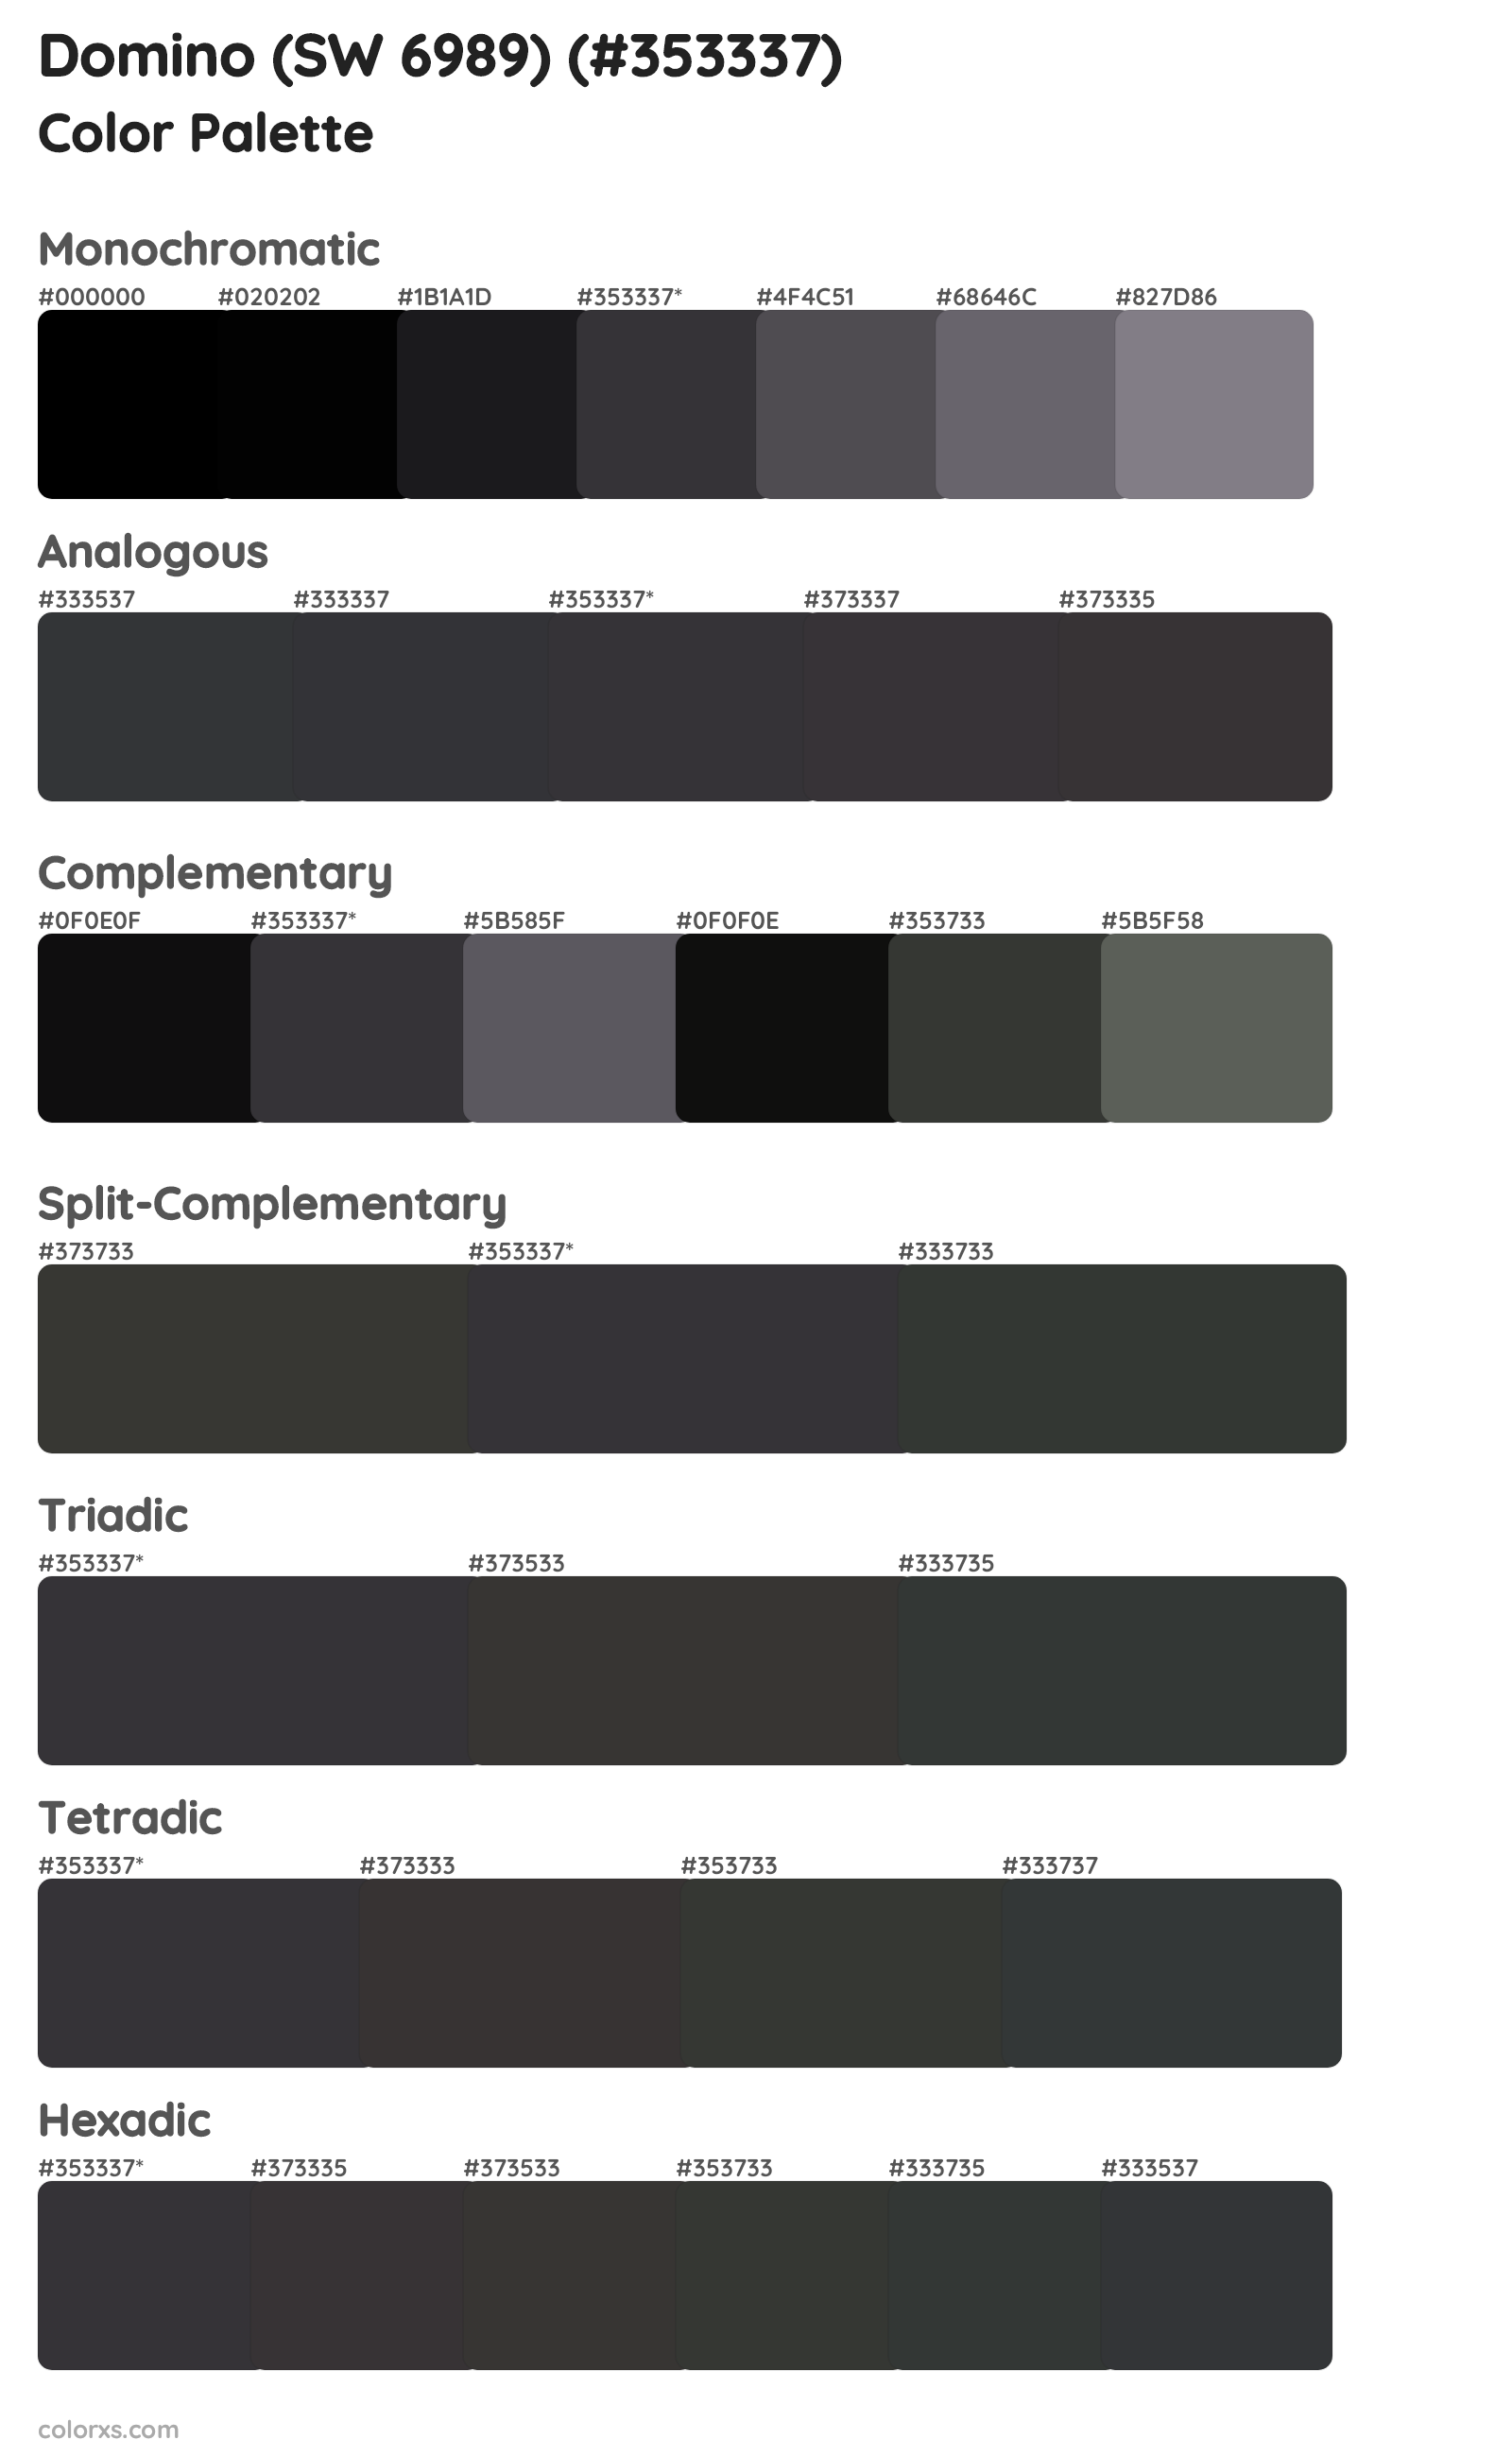 Domino (SW 6989) Color Scheme Palettes